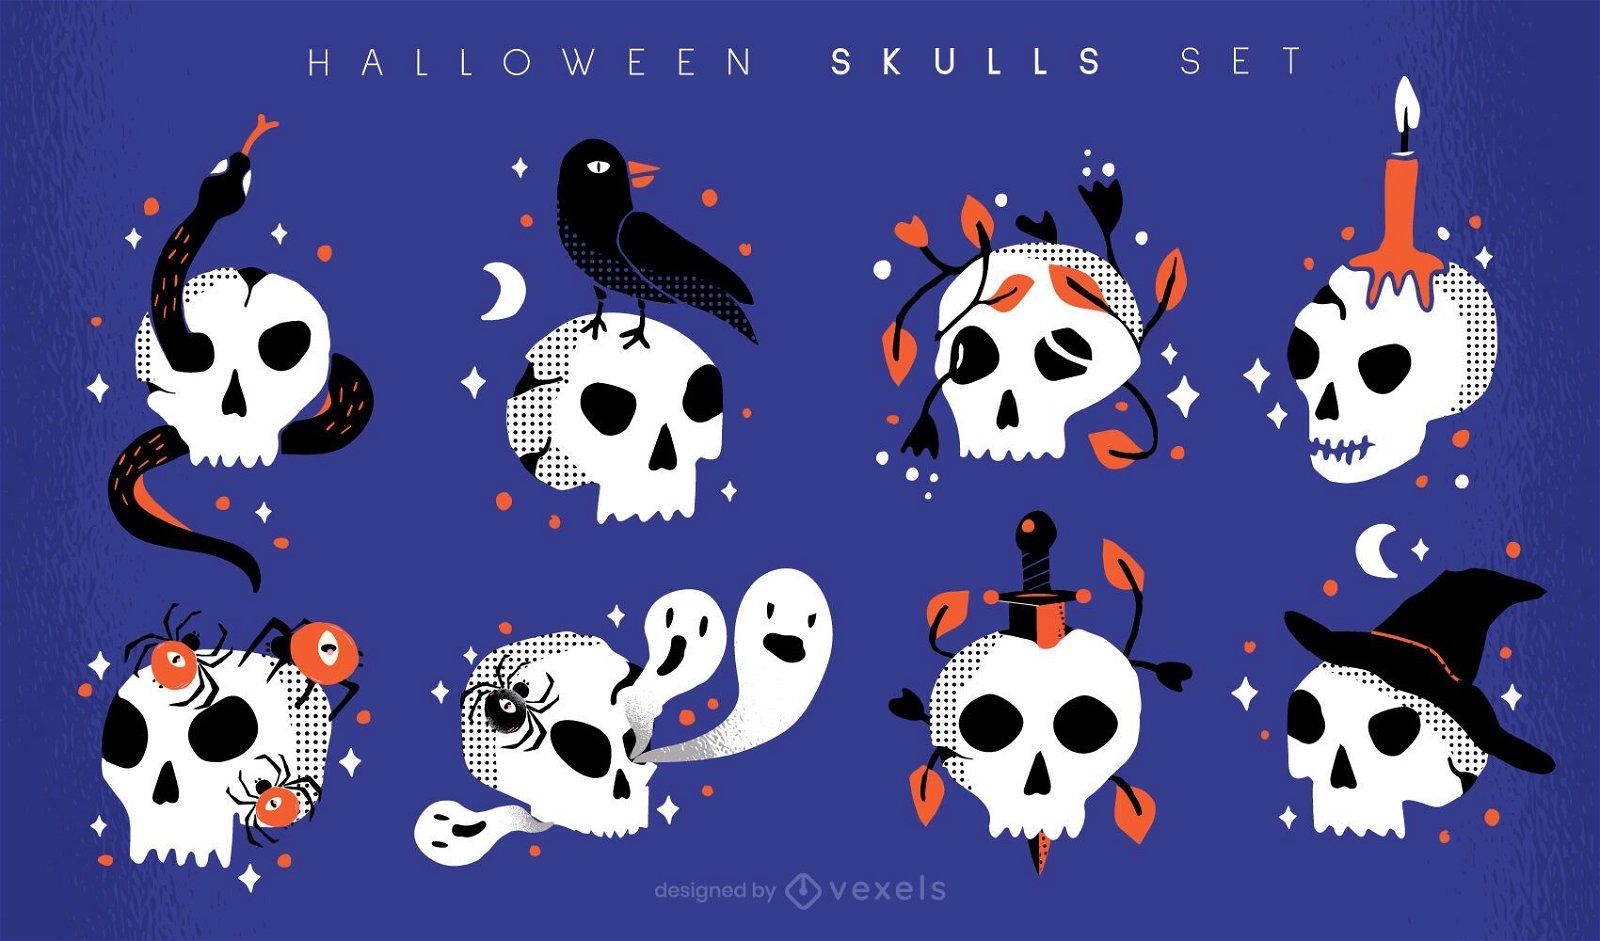 Halloween skulls illustration set